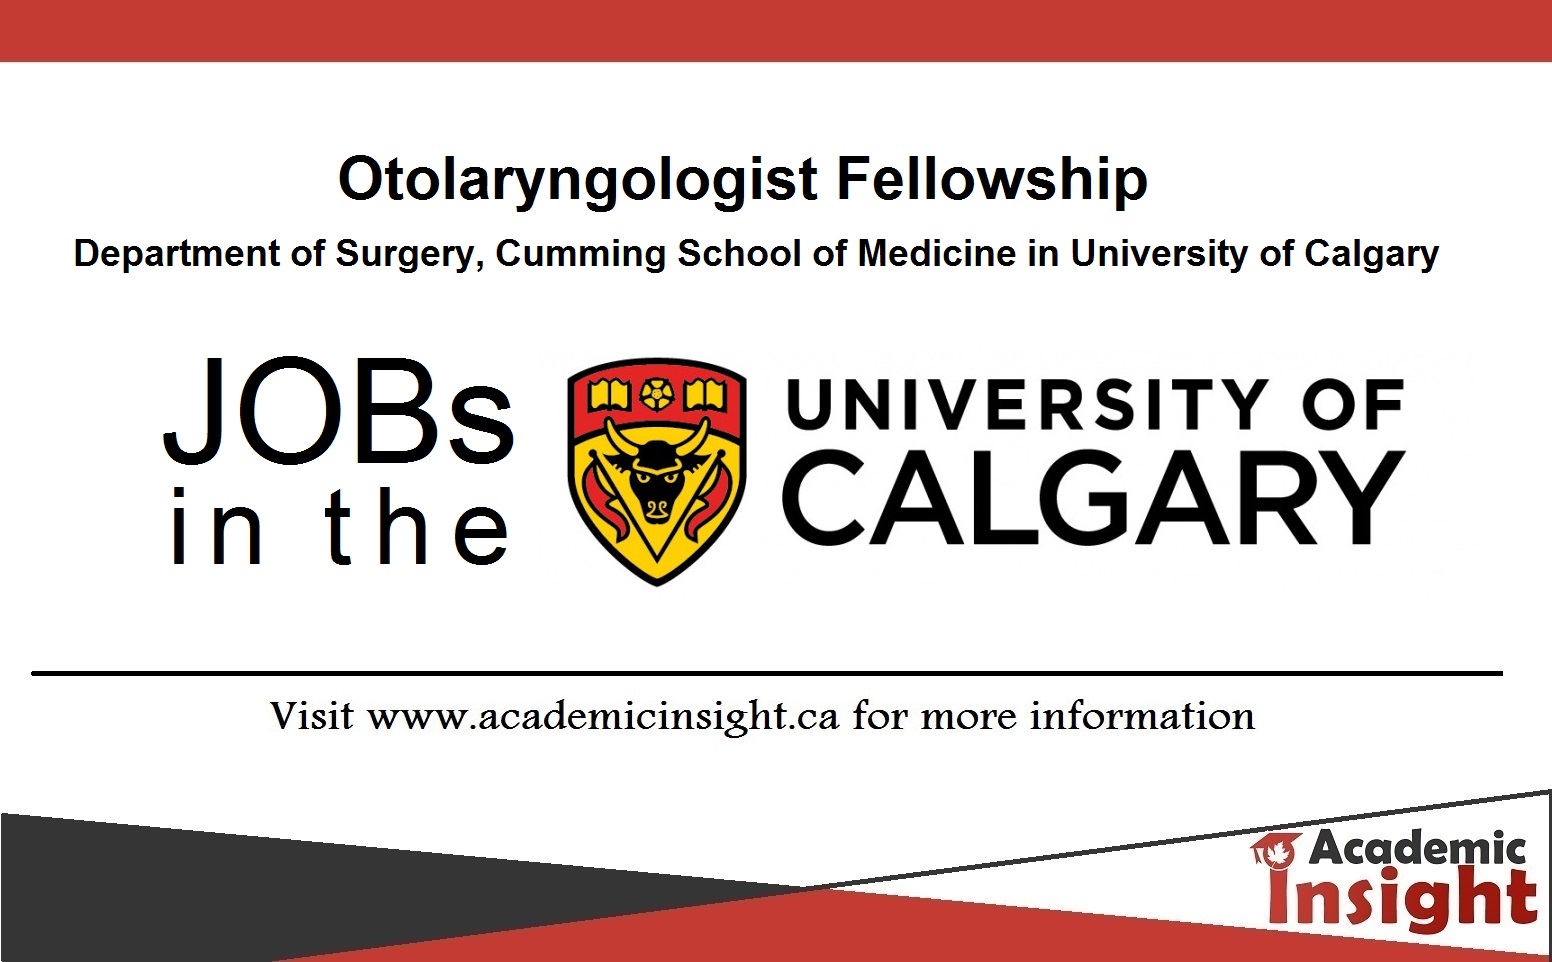 Otolaryngologist Fellowship of Head and Neck Surgeon, Department of Surgery, Cumming School of Medicine in University of Calgary